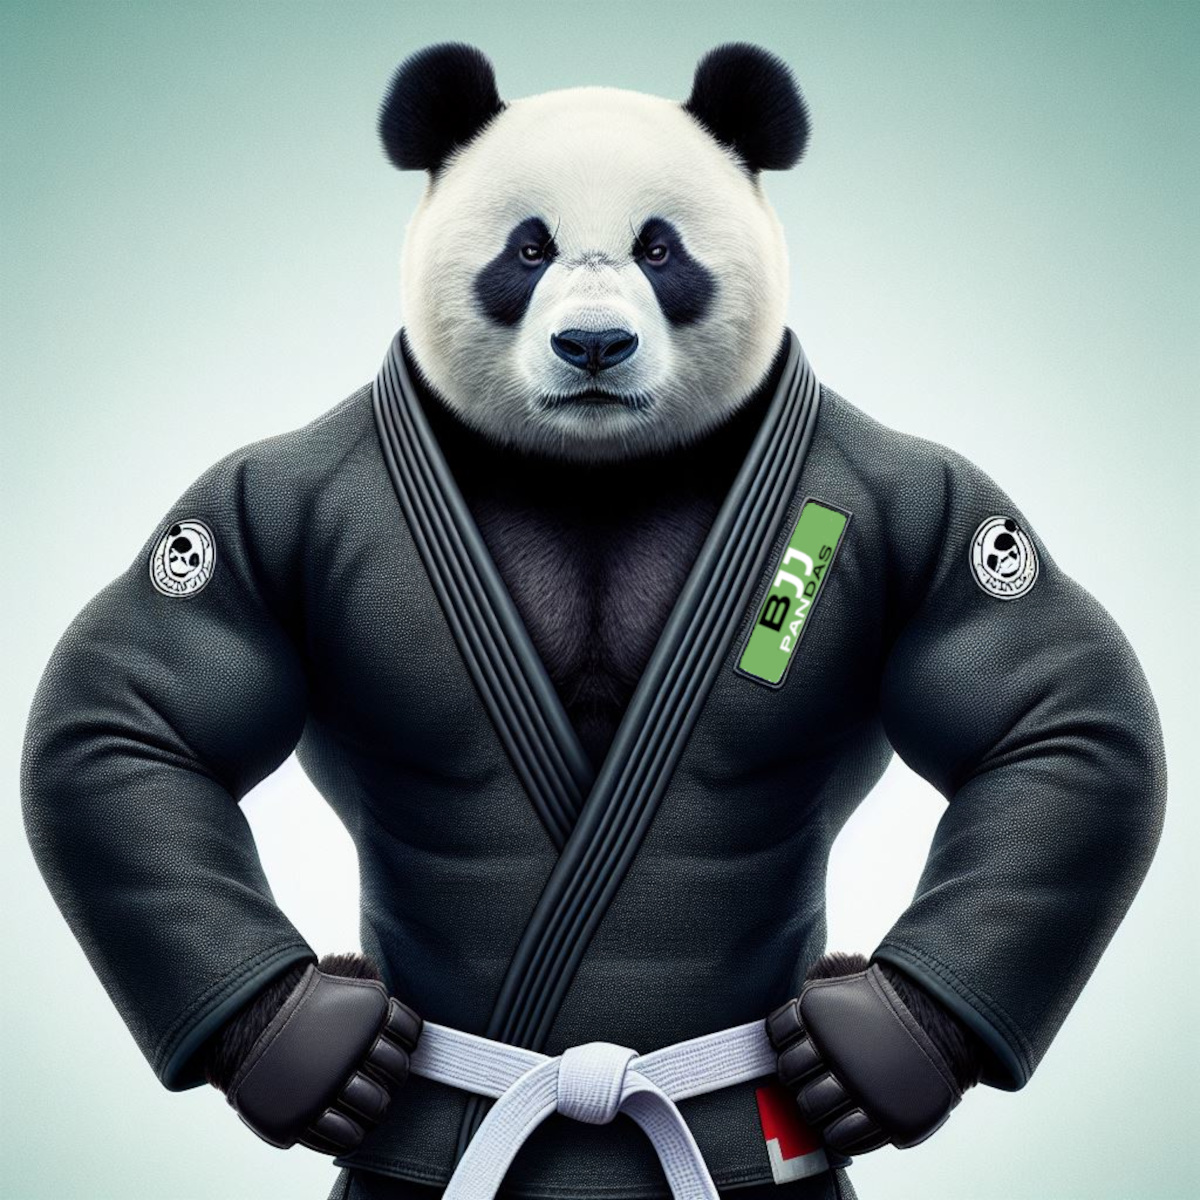 BJJ Panda Standing Strong